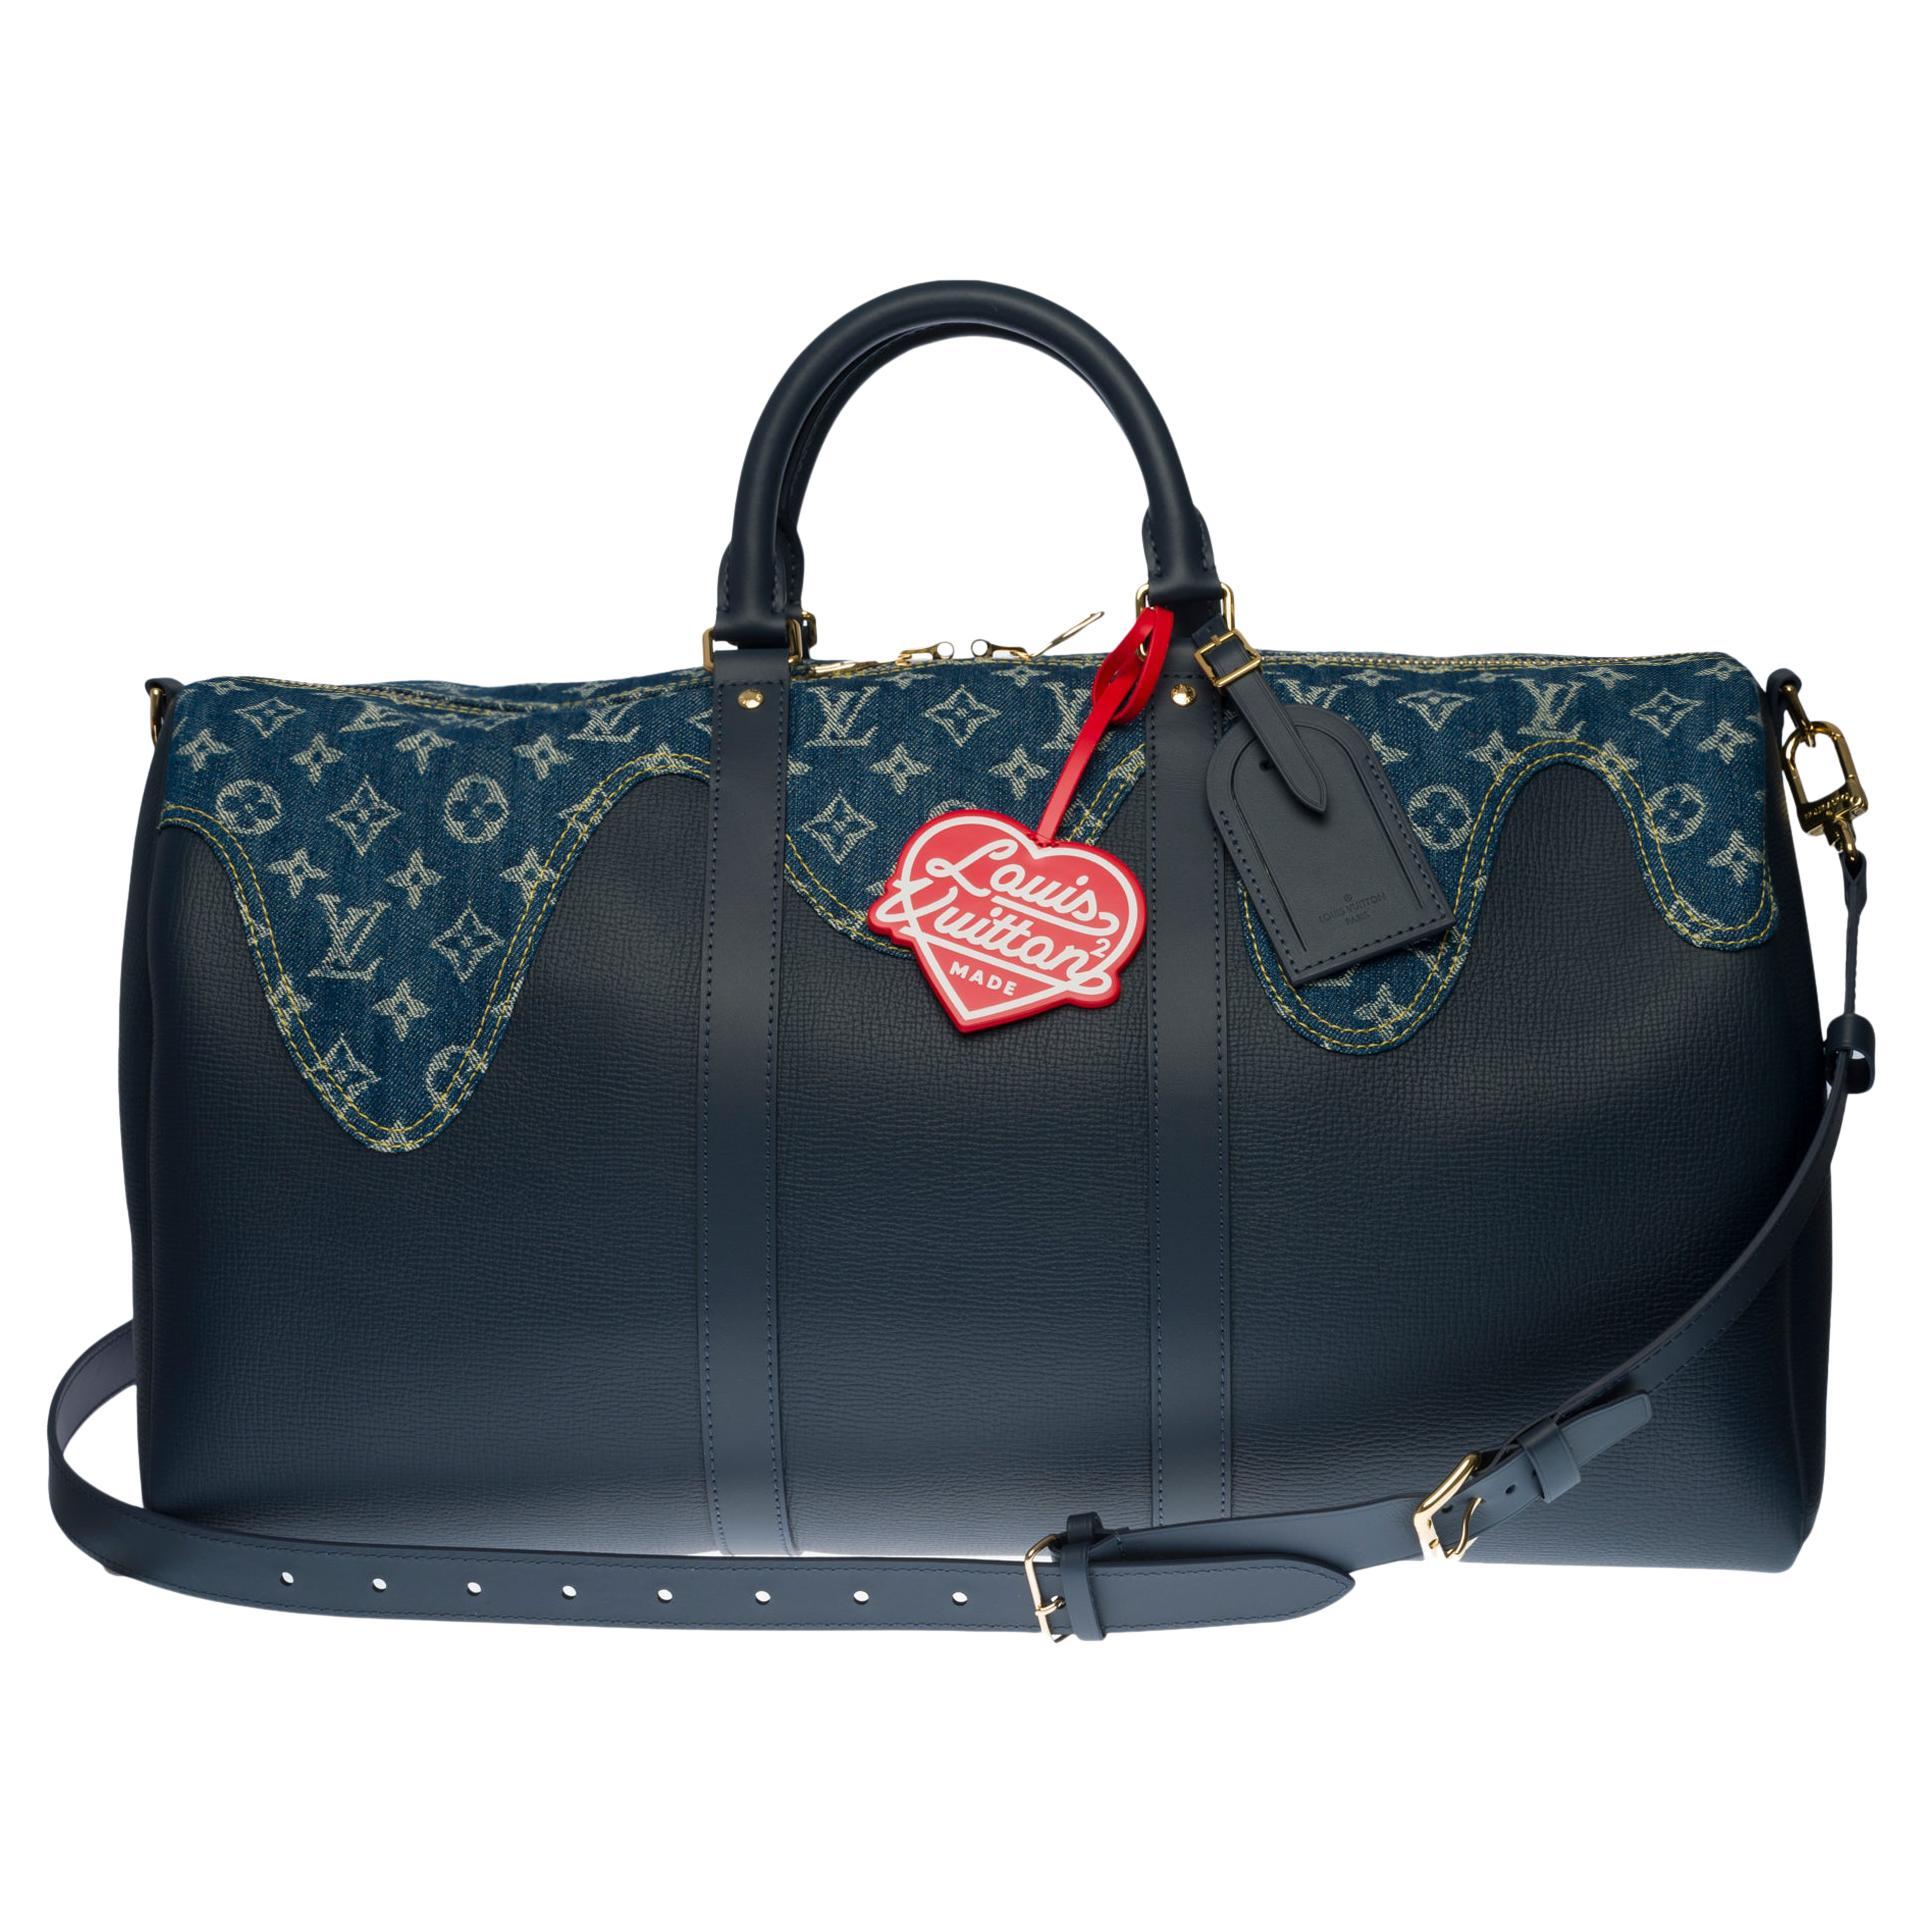 NEW-Louis Vuitton keepall 50 strap Travel bag in blue denim & leather by Nigo